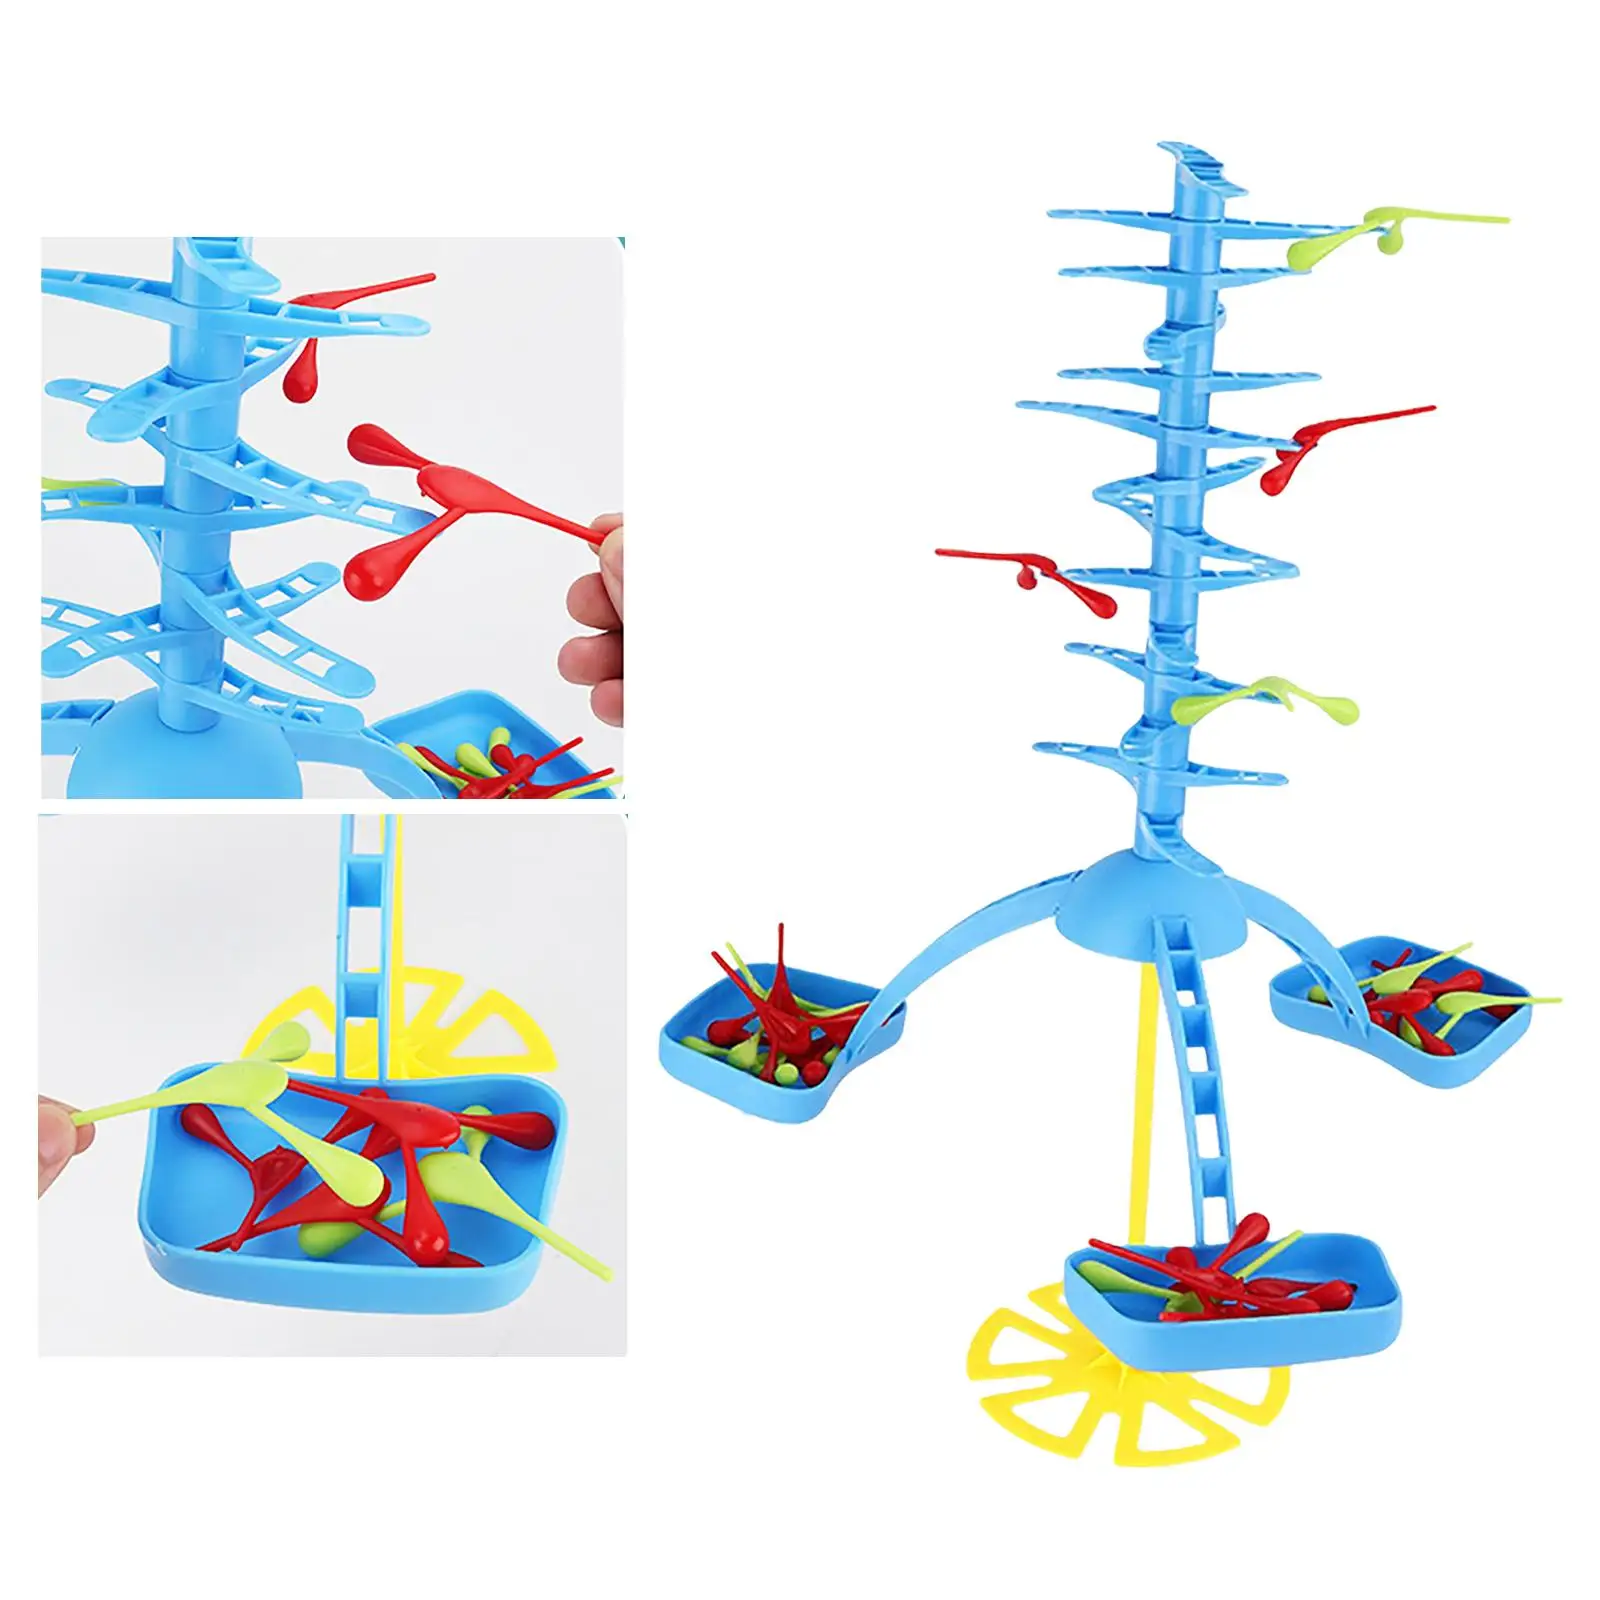 Gravity Bird Edge Balance Game Toy for Children Developing Fine   Montessori Toys Easy to Install Portable